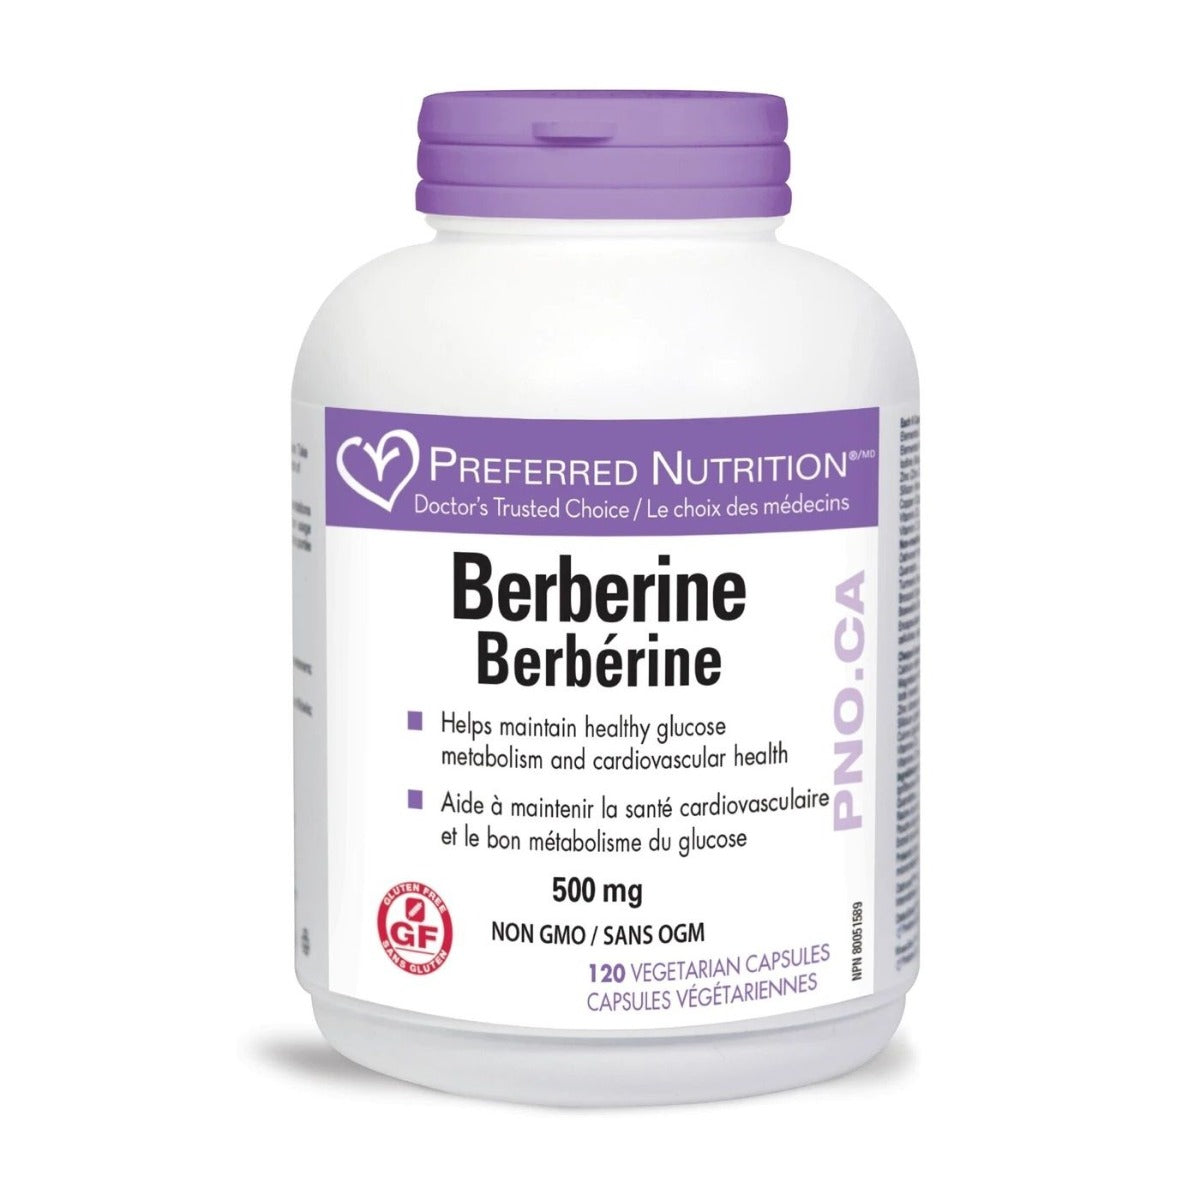 Preferred Nutrition Berberine 500mg 120s product image - Bottle of 120 vegetable capsules